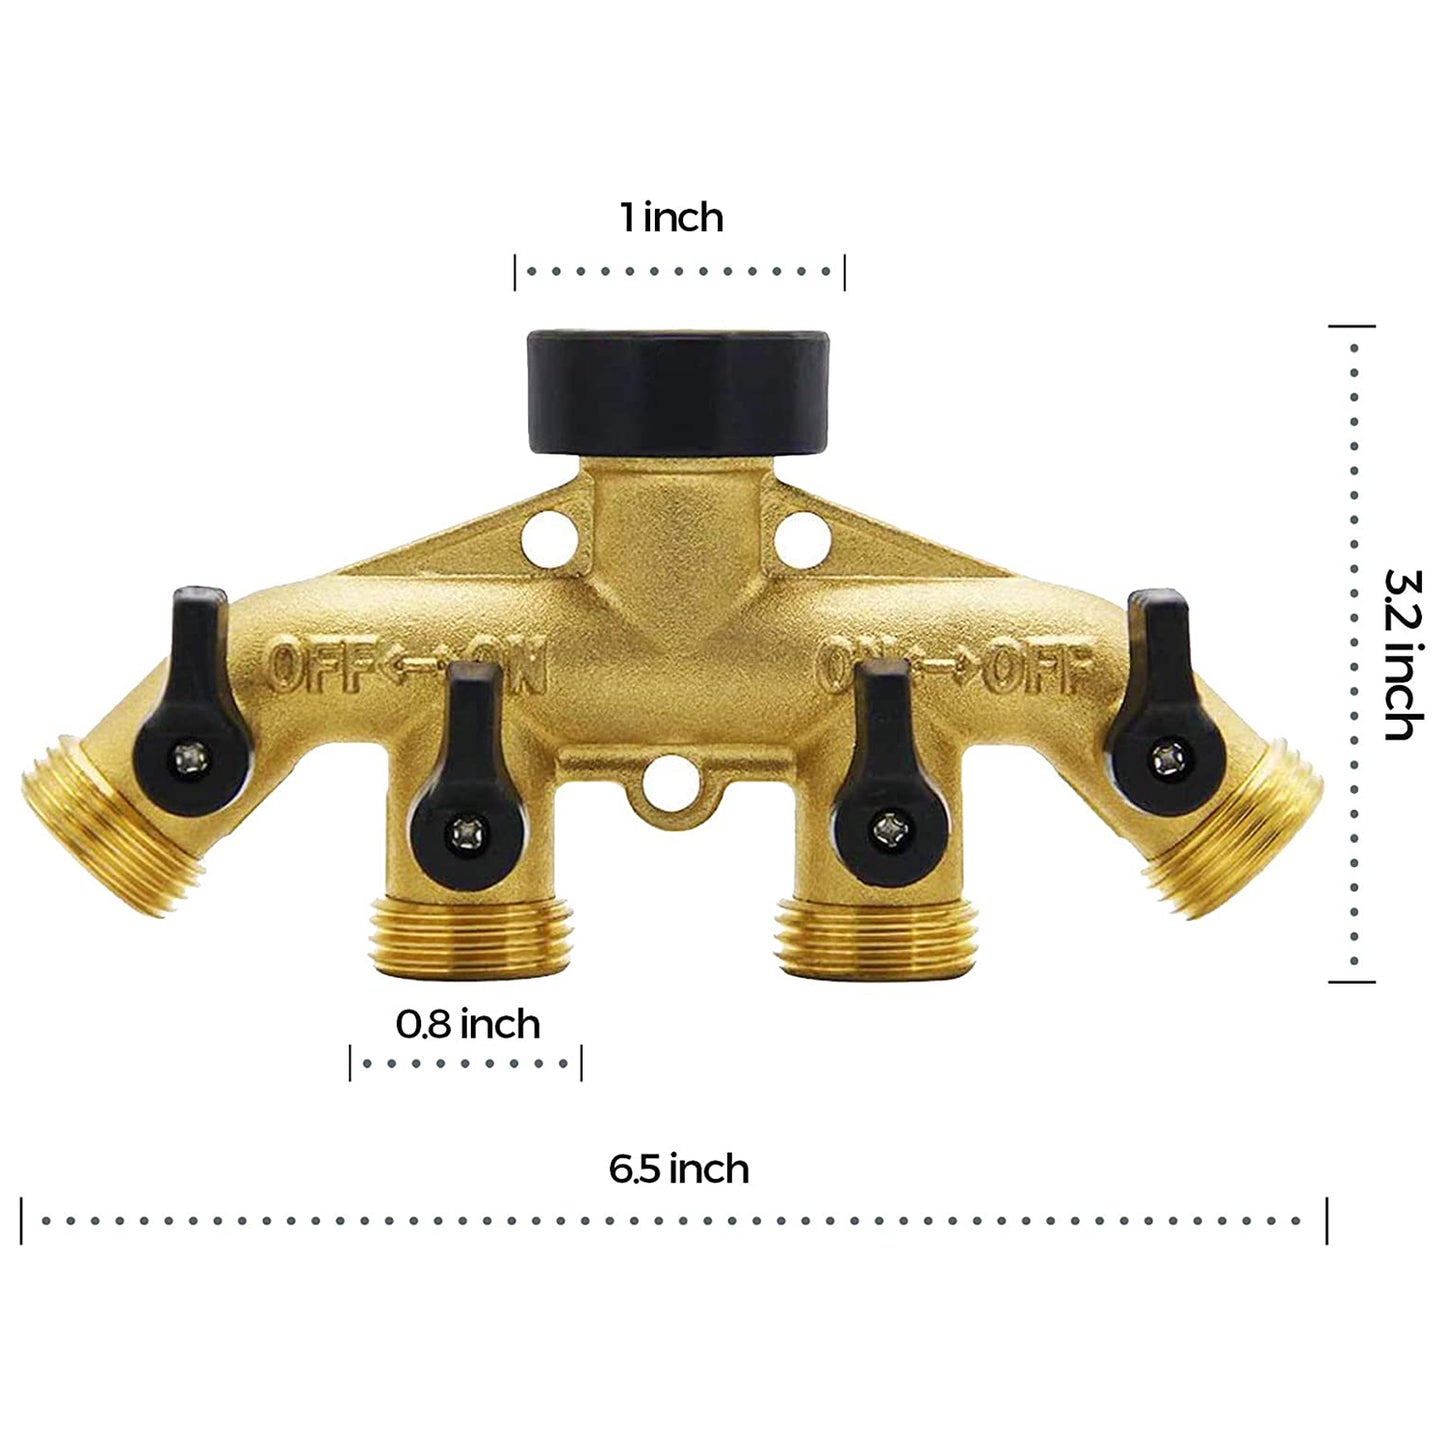 4 Way Brass Hose Splitter 3/4" Hose Faucet Manifold with 4 Valves